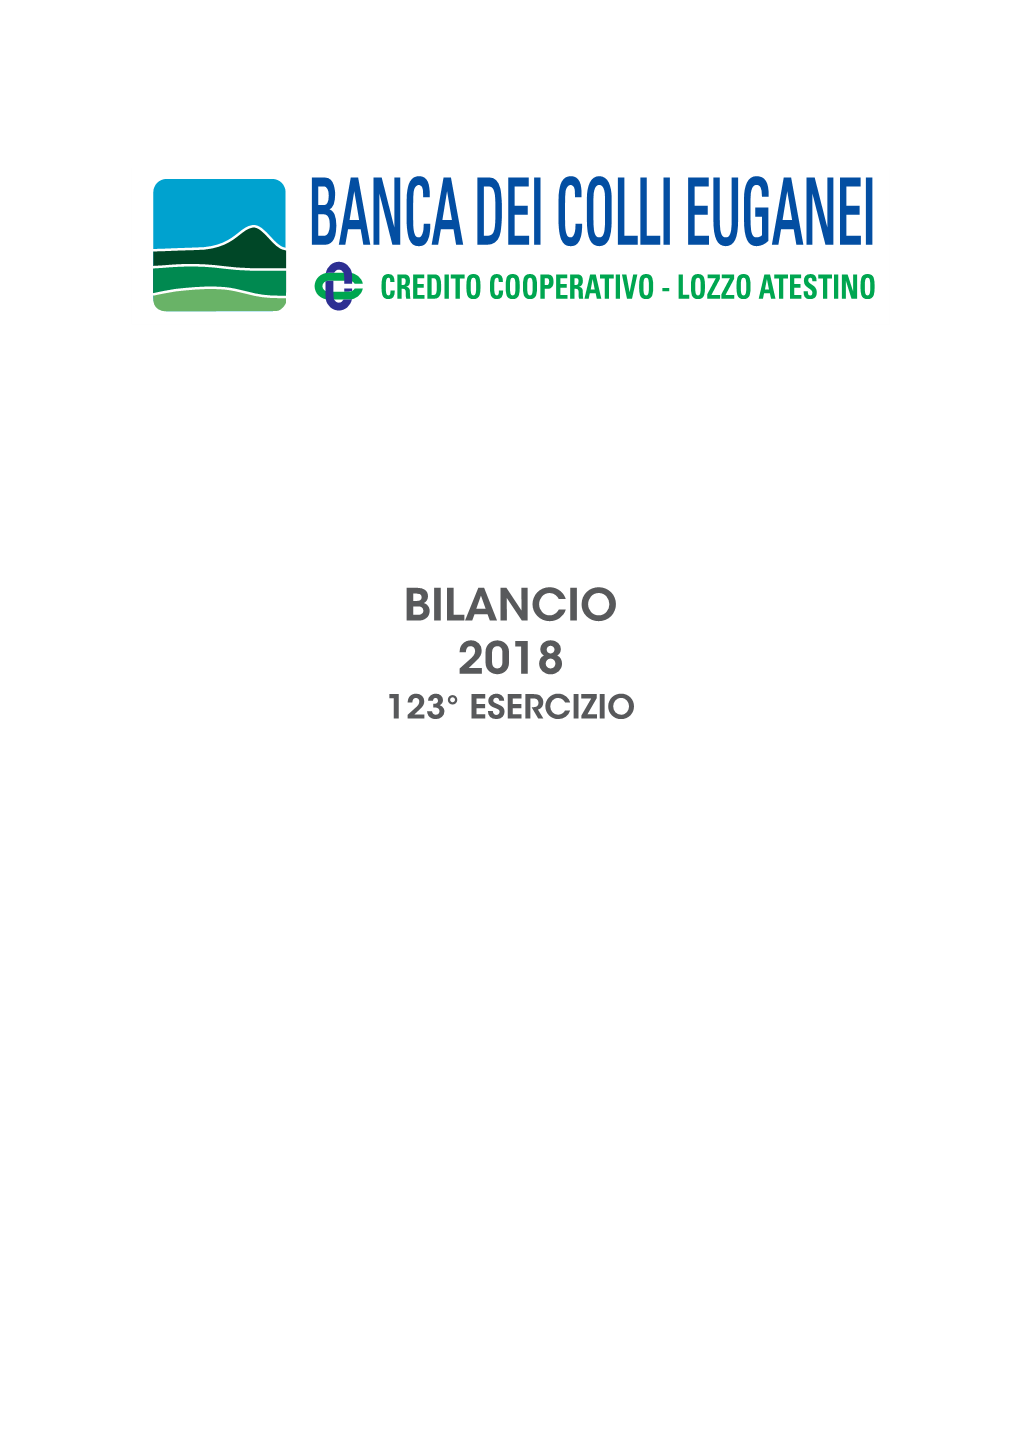 Bilancio 31.12.2018 Banca Dei Colli Euganei